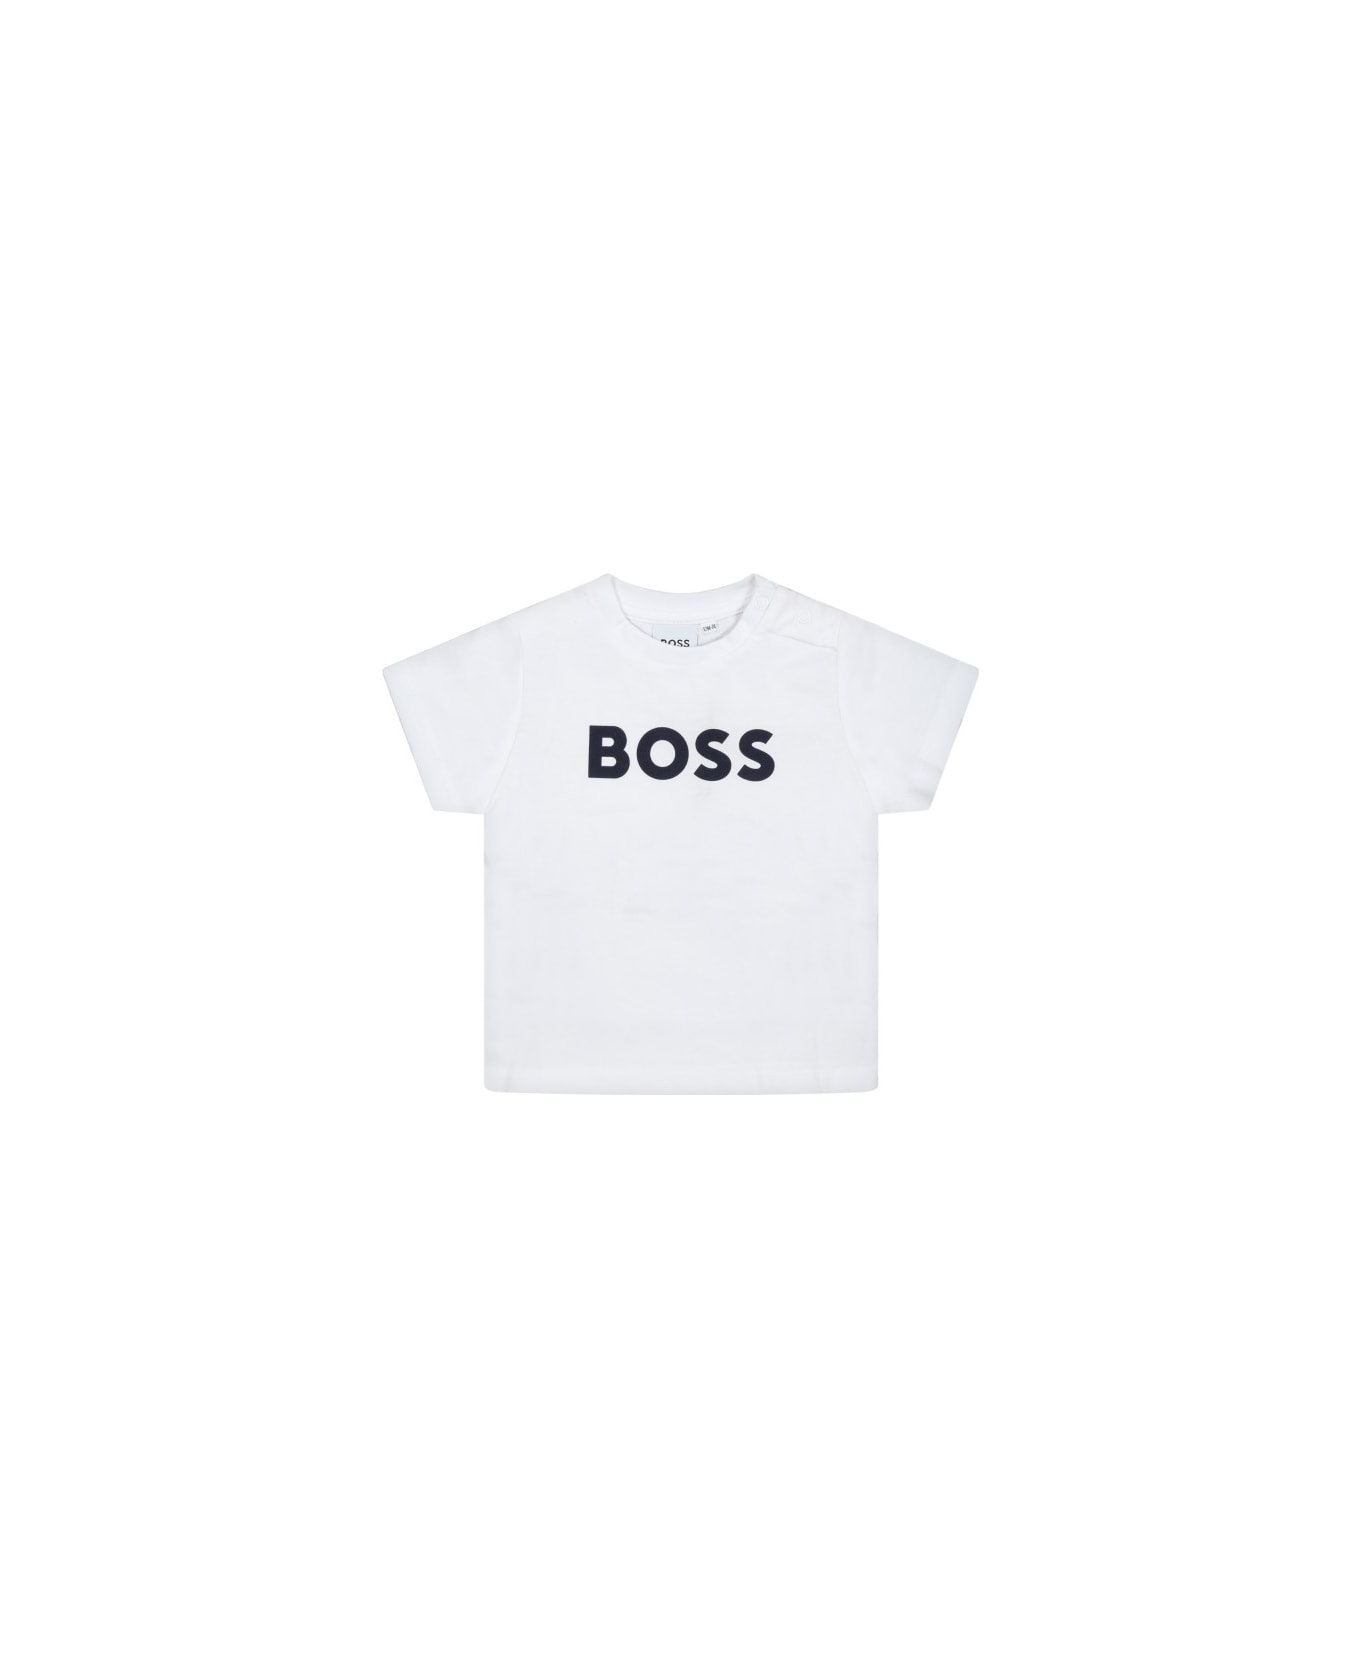 Hugo Boss Printed T-shirt - White